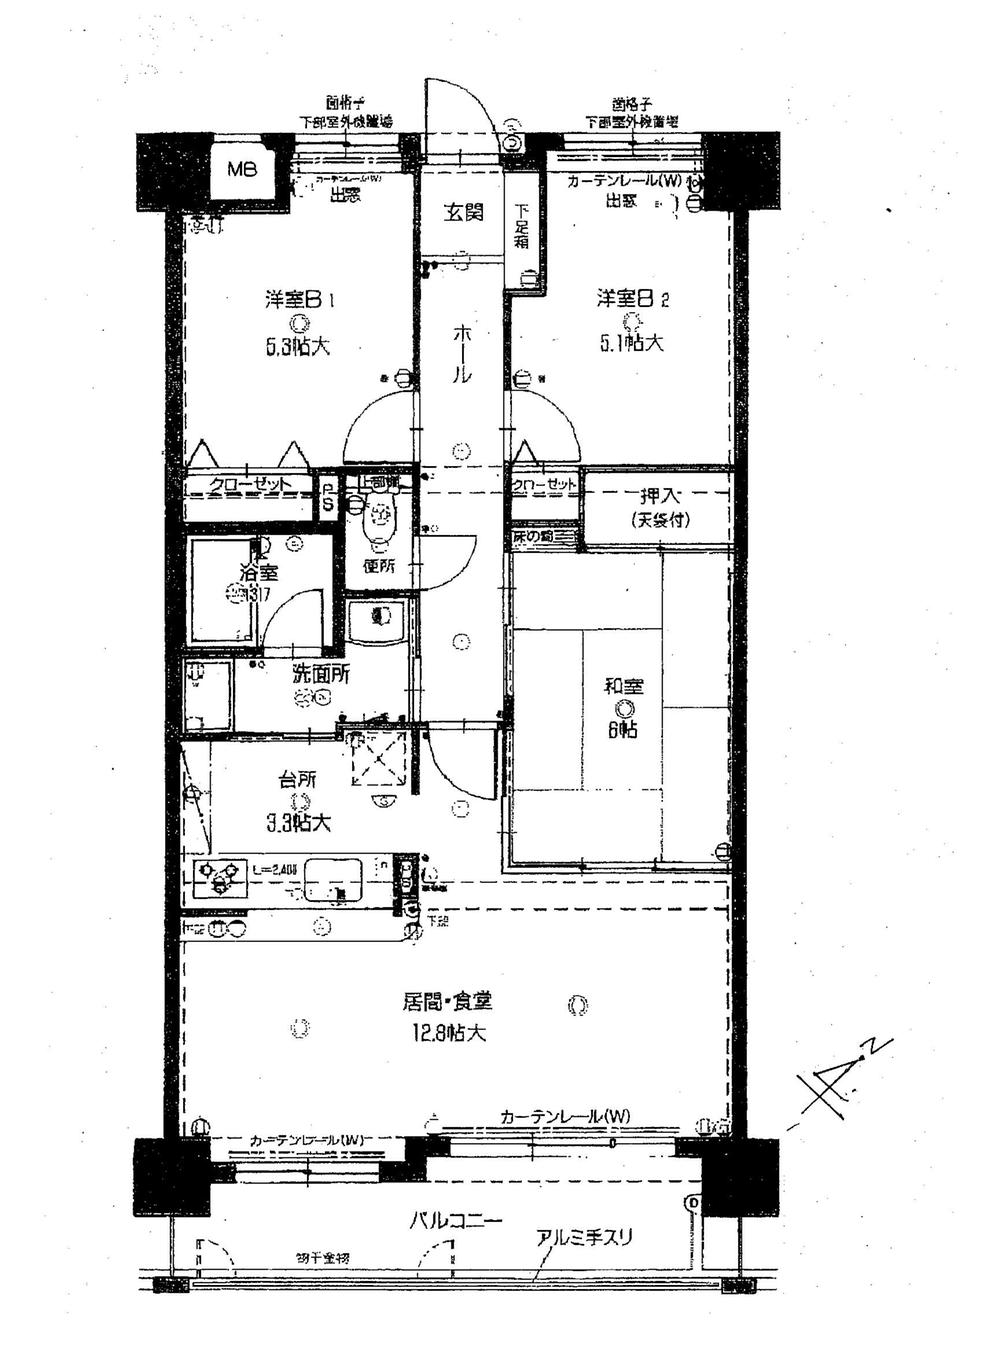 Floor plan. 3LDK, Price 12 million yen, Occupied area 70.28 sq m , Balcony area 8.91 sq m